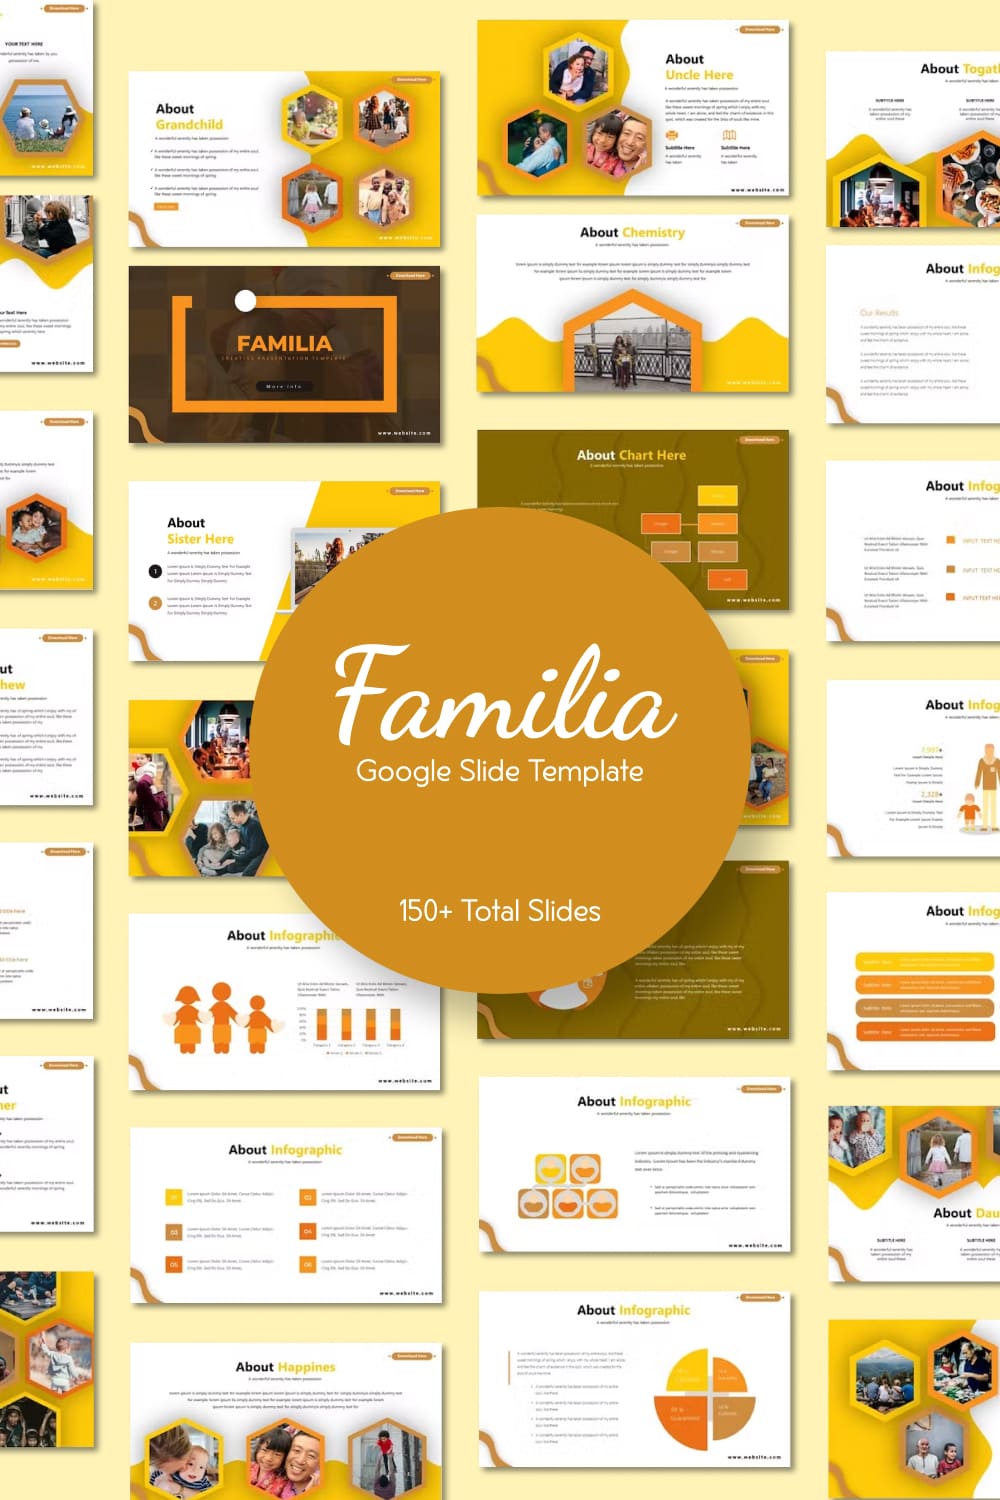 Familia | Google Slides Template - Pinterest.